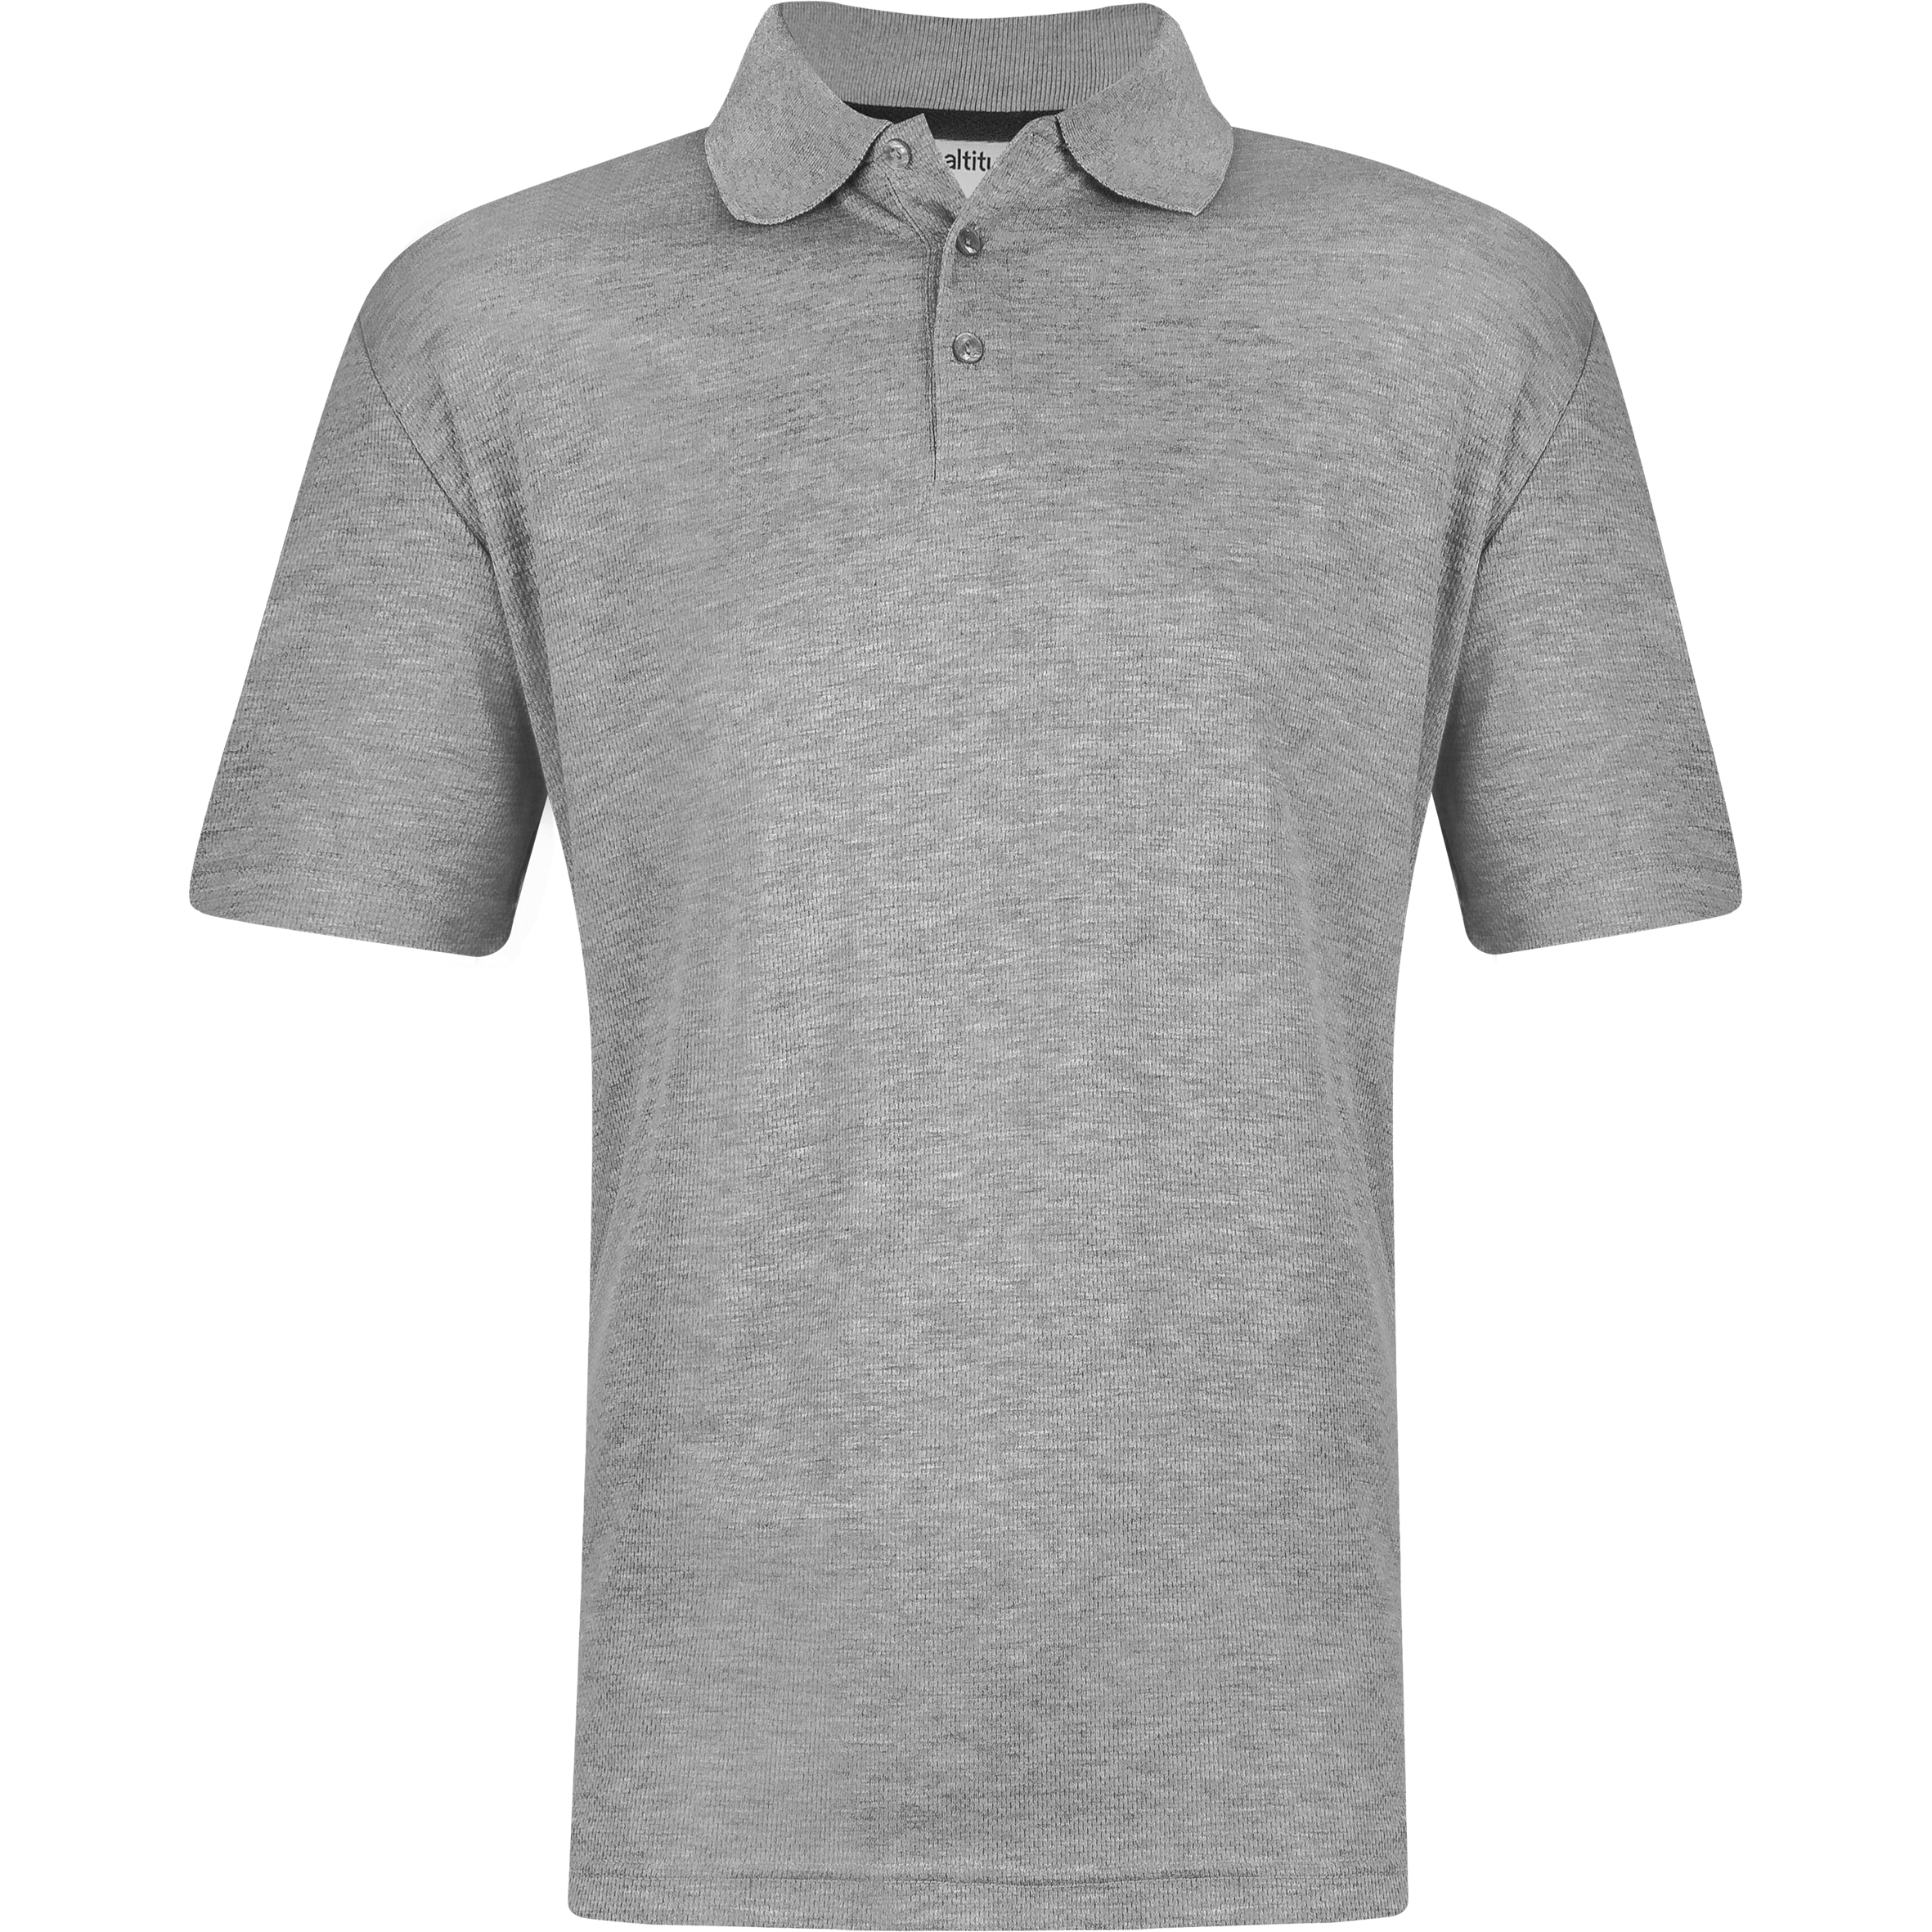 Mens Bayside Golf Shirt - Grey